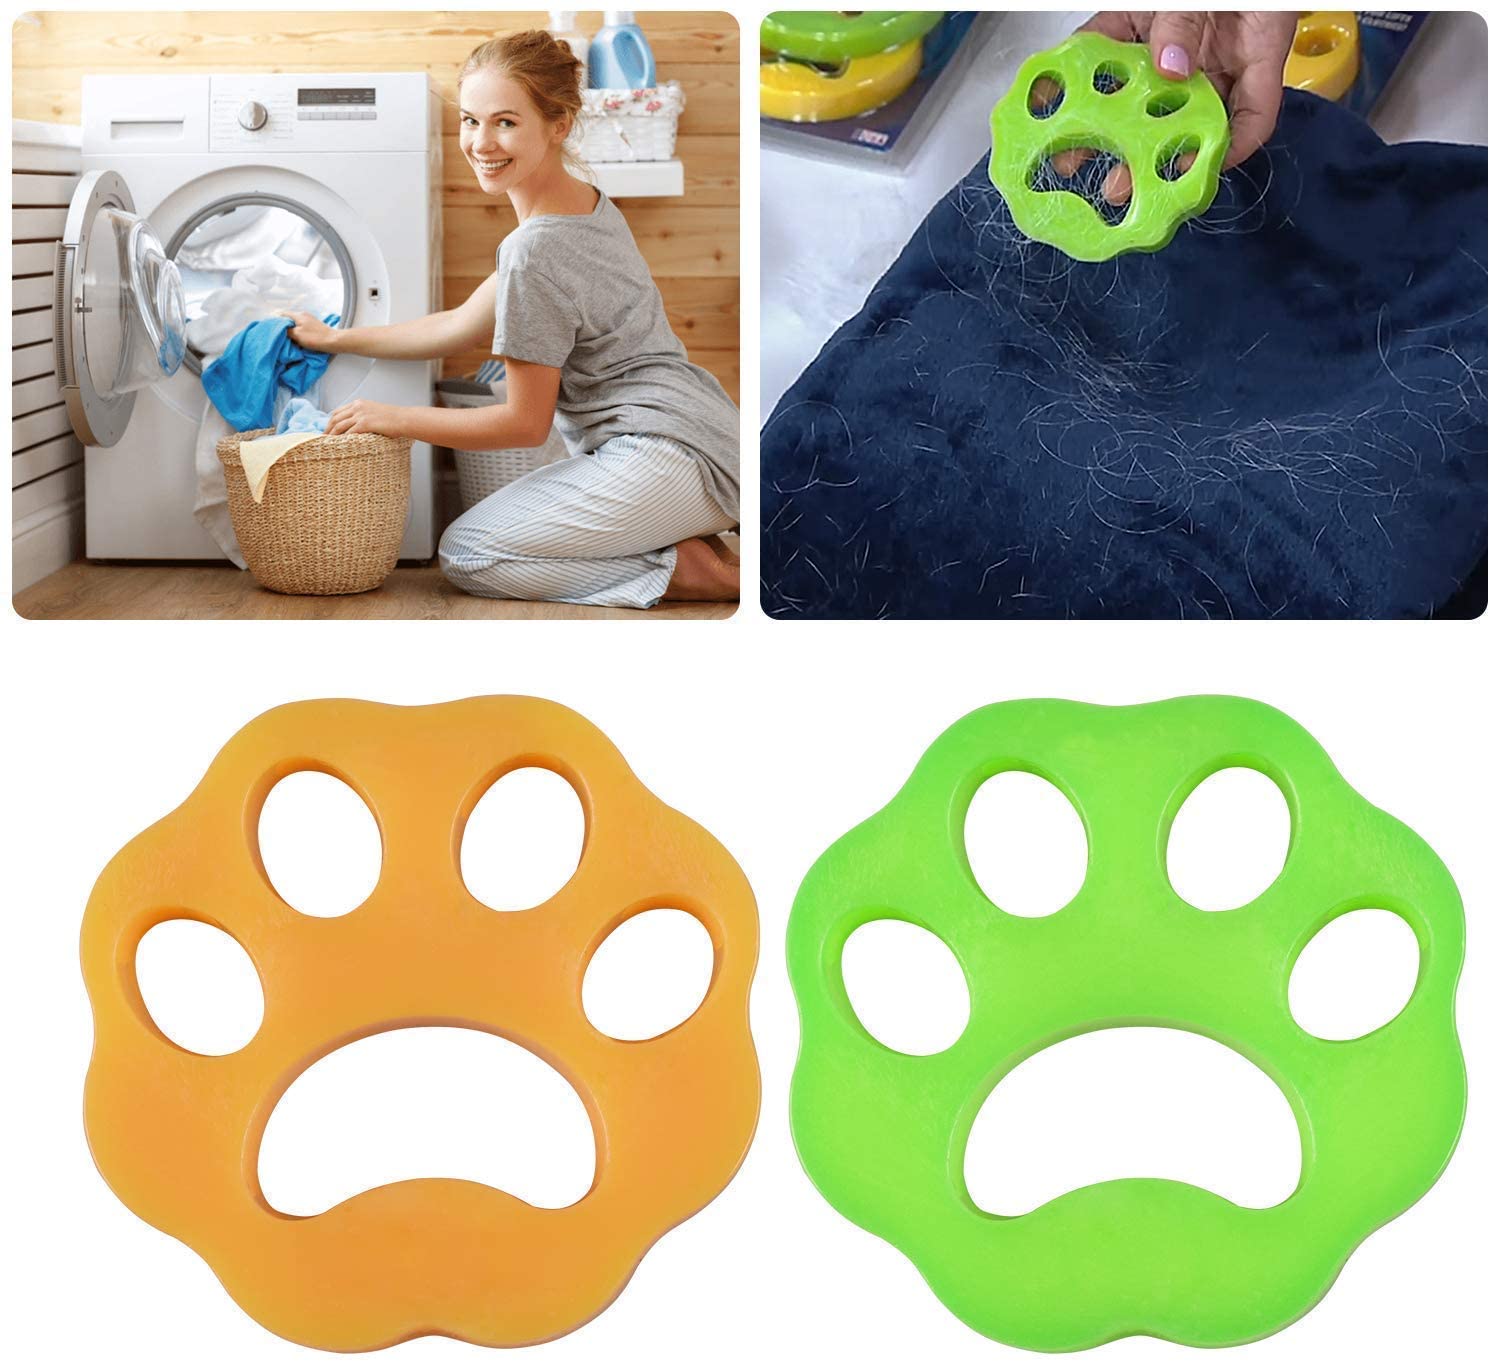  Zhybca - Eliminador de pelo de mascotas para lavandería, lavadora, recogedor de pelo de mascotas, removedor de pelo de mascotas para ropa/ropa de cama, bola de limpieza reutilizable 2020 Limpiador. 